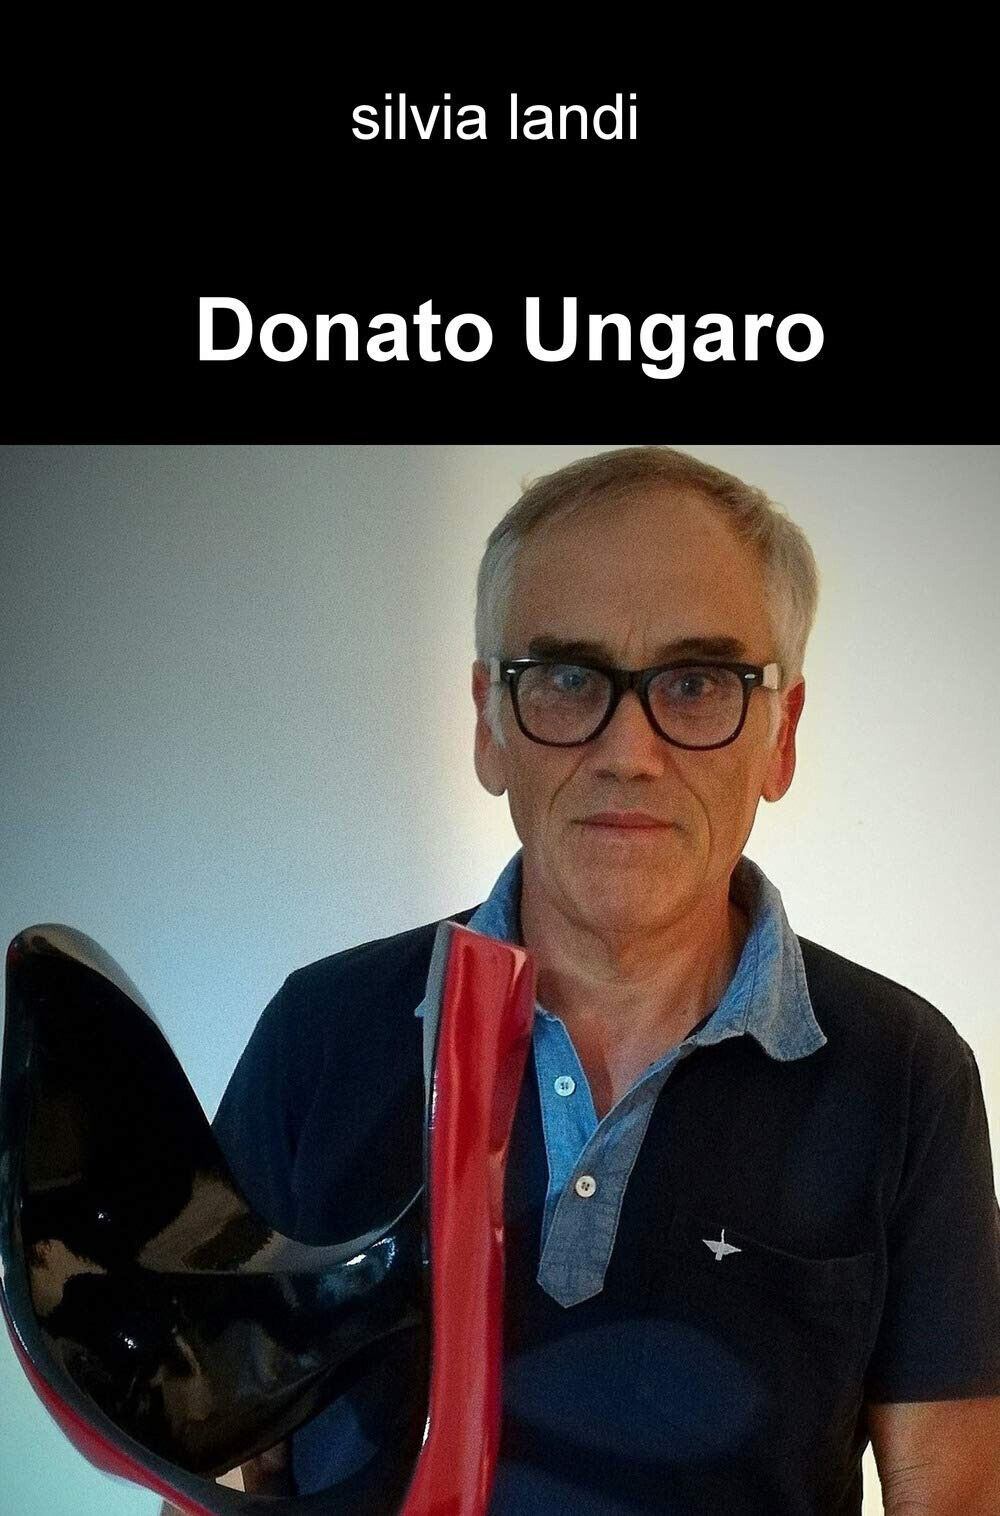 Donato Ungaro - Silvia Landi - ilmiolibro, 2019